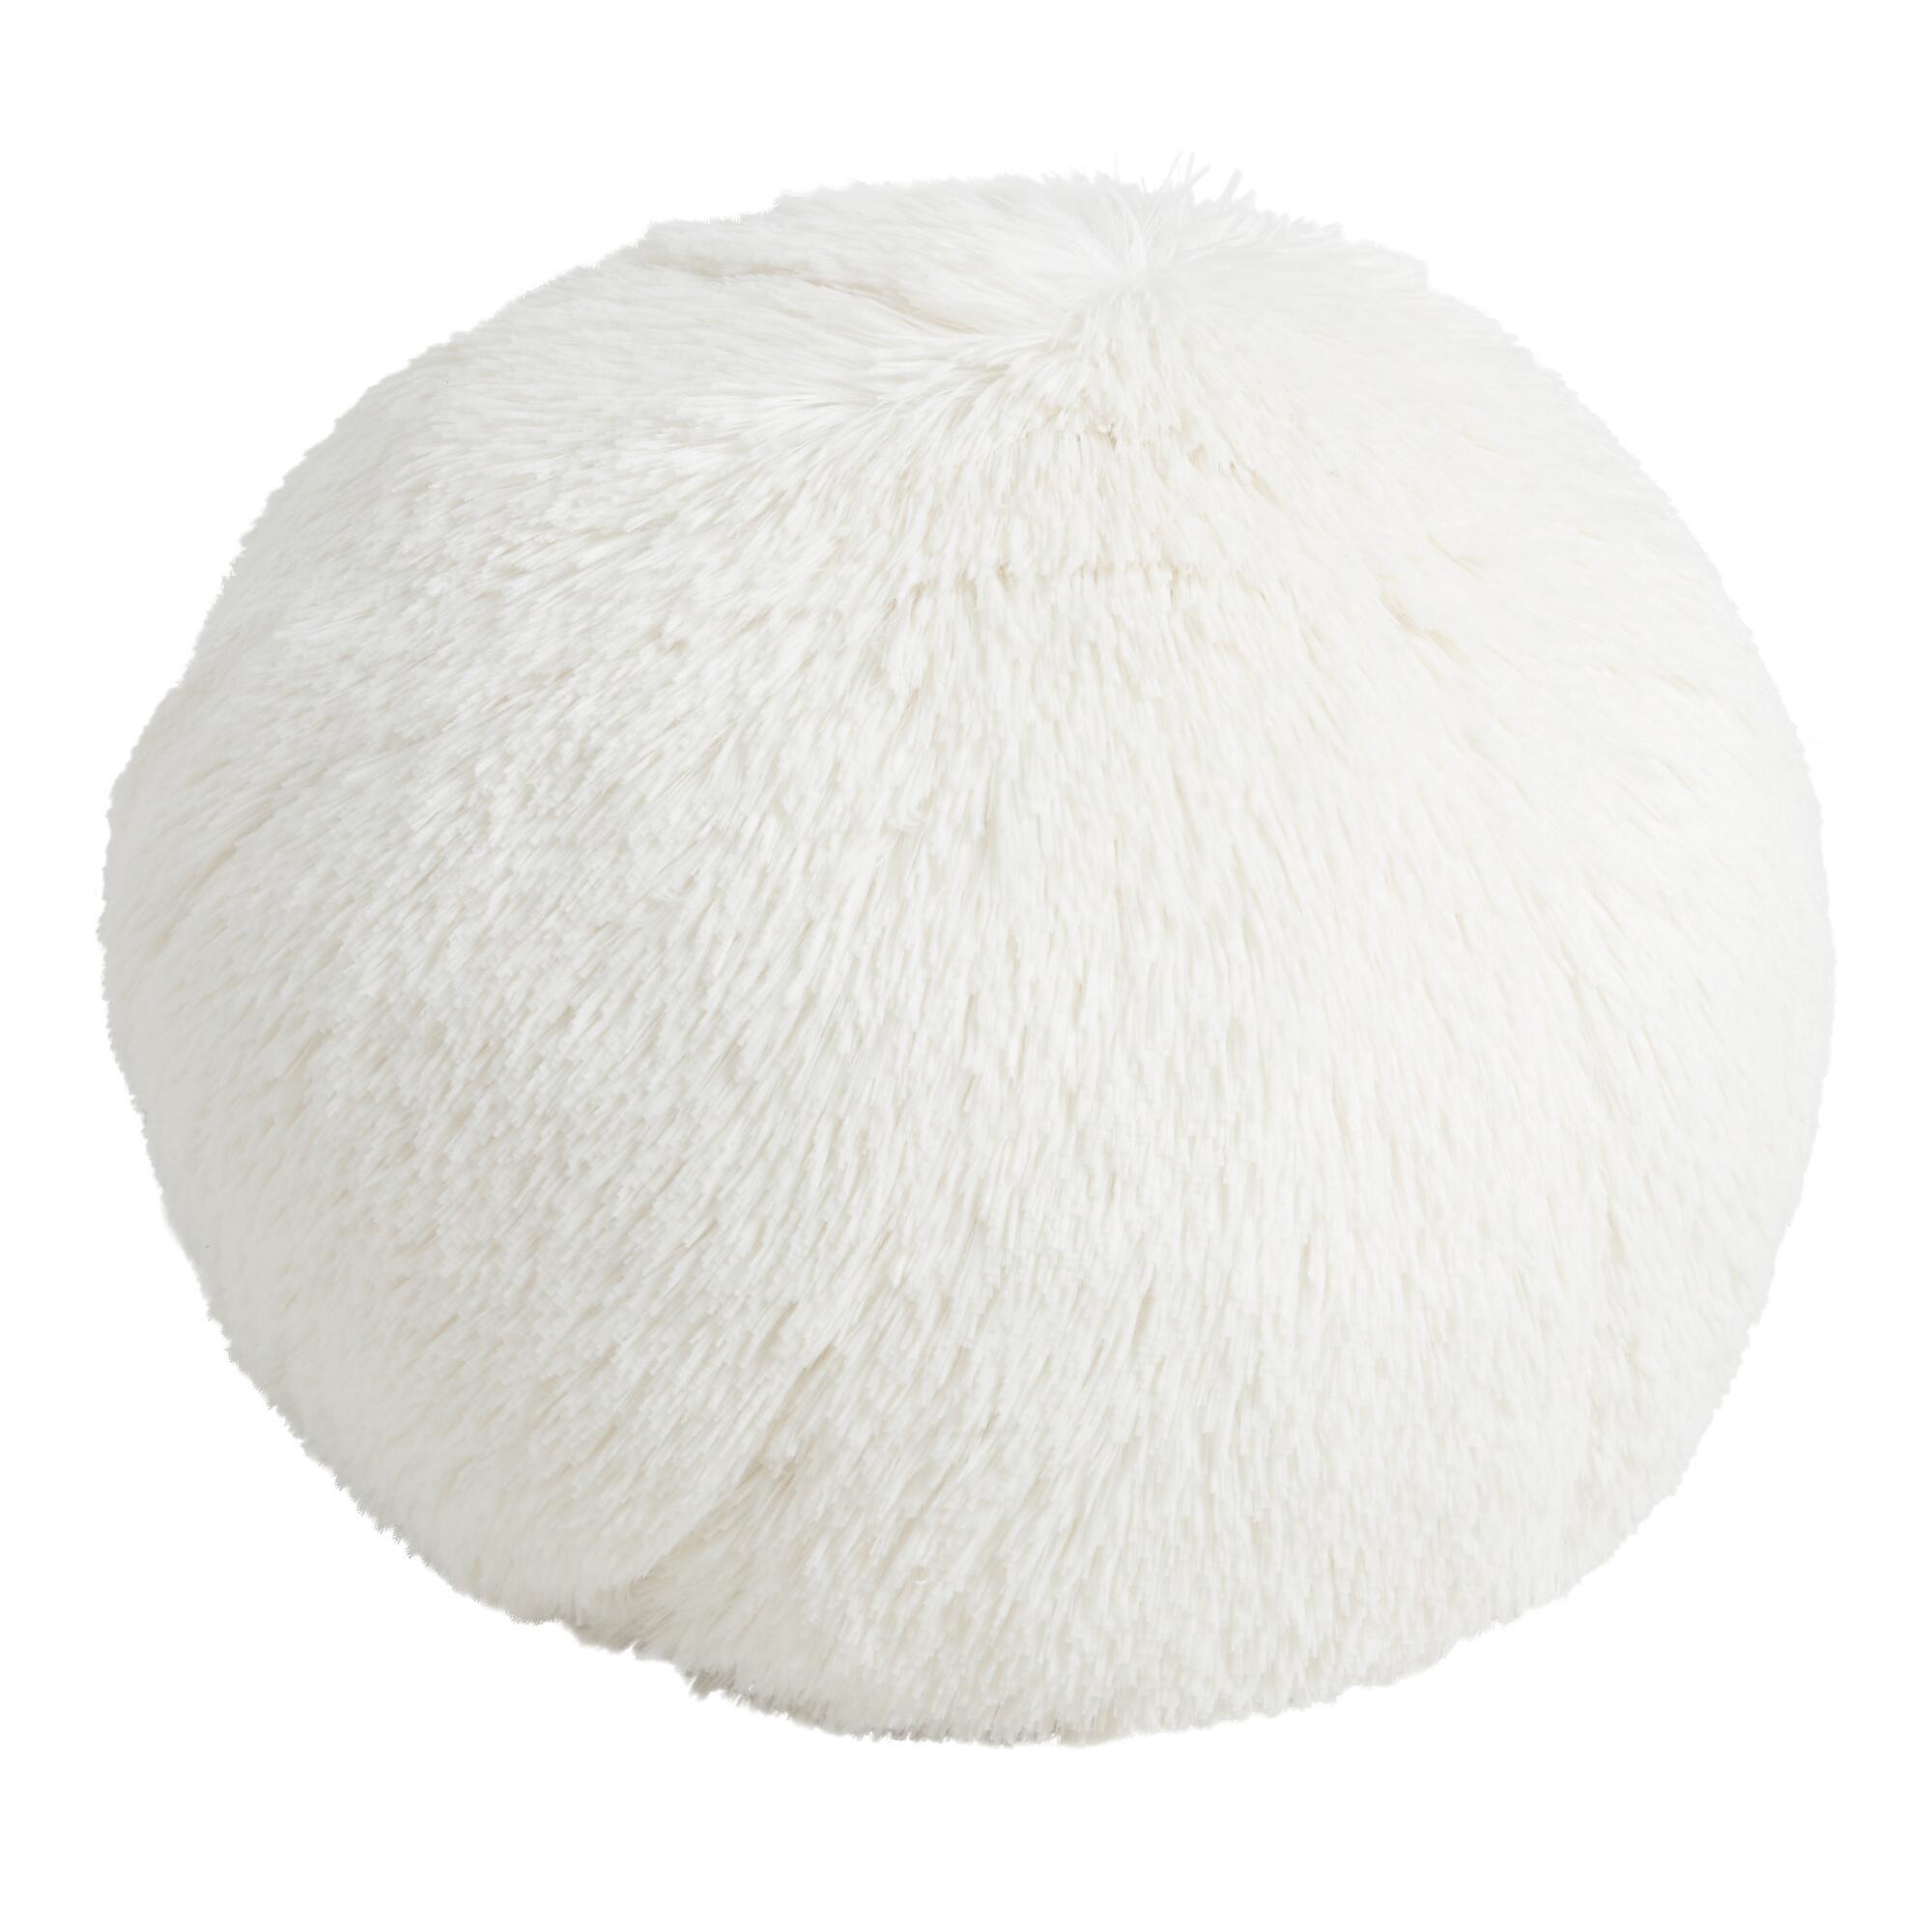 Round White Snowball Throw Pillow by World Market